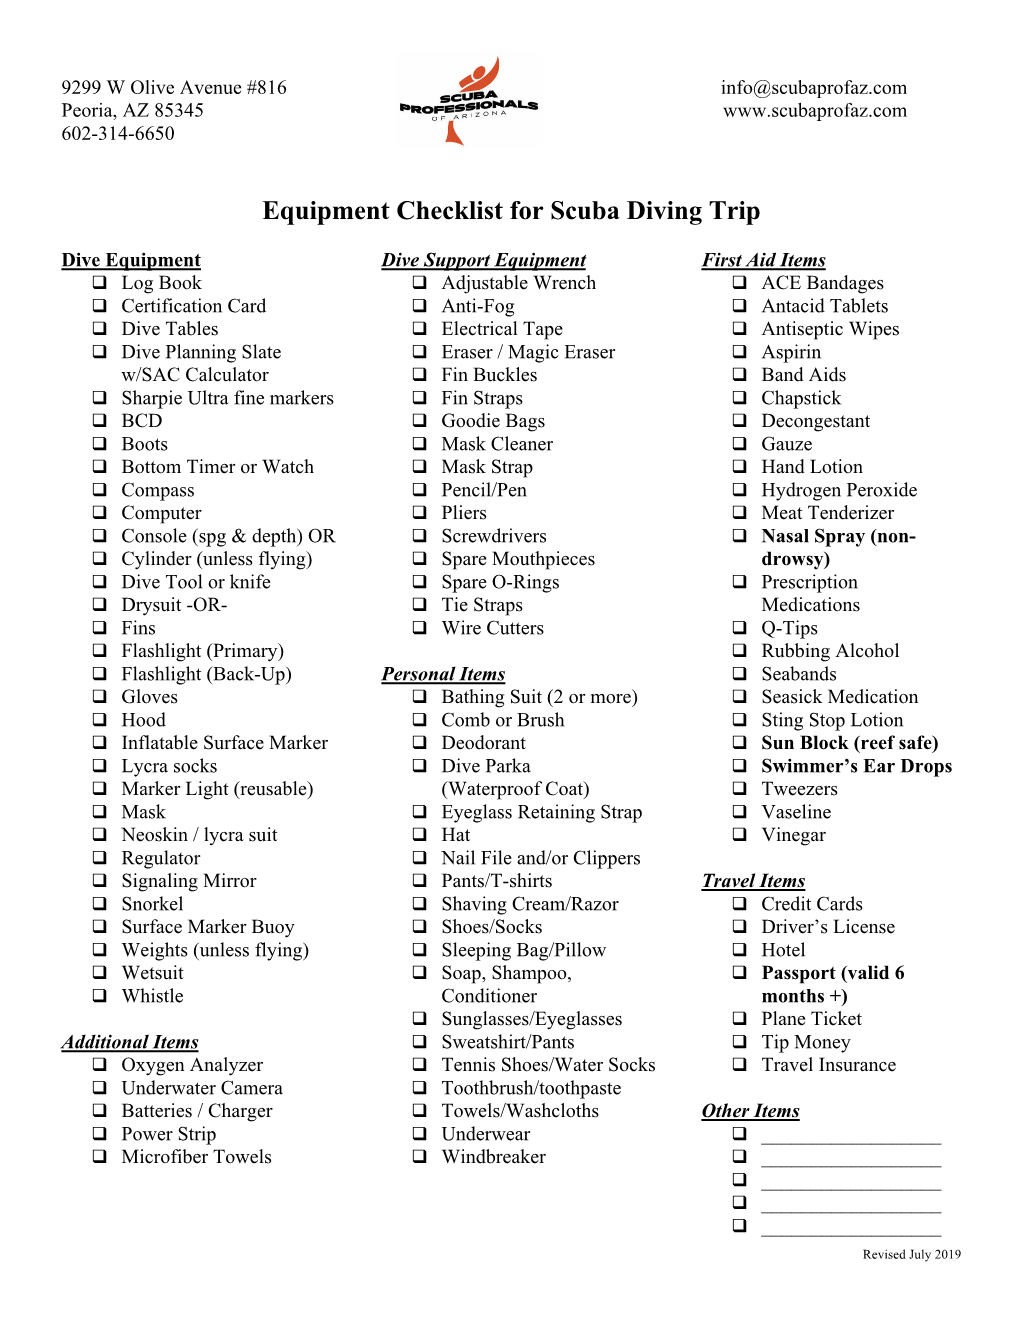 Equipment Checklist for Scuba Diving Trip